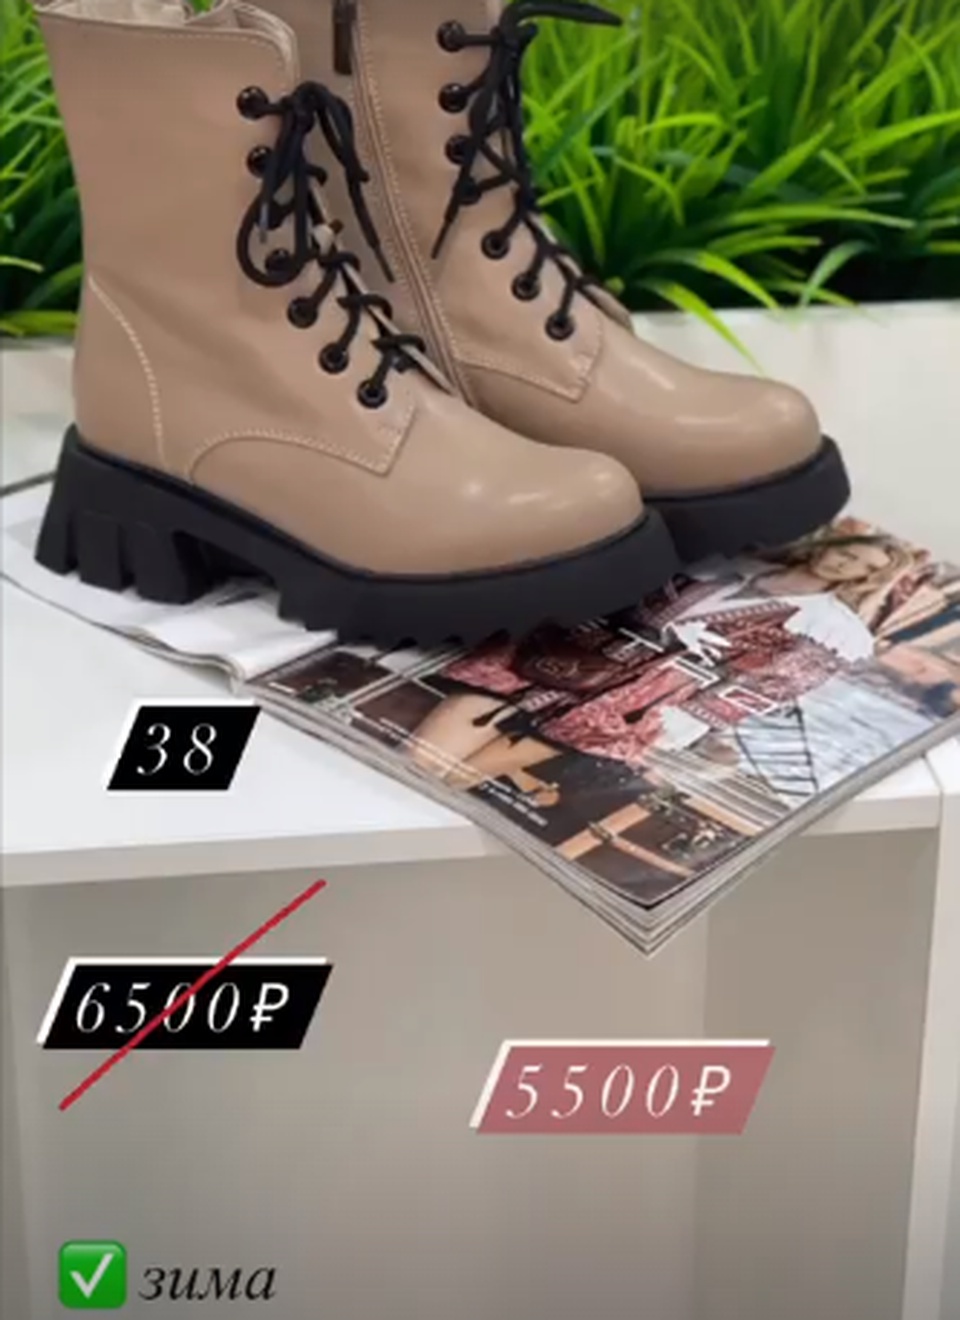 Ботинки - 5 500 ₽, заказать онлайн.